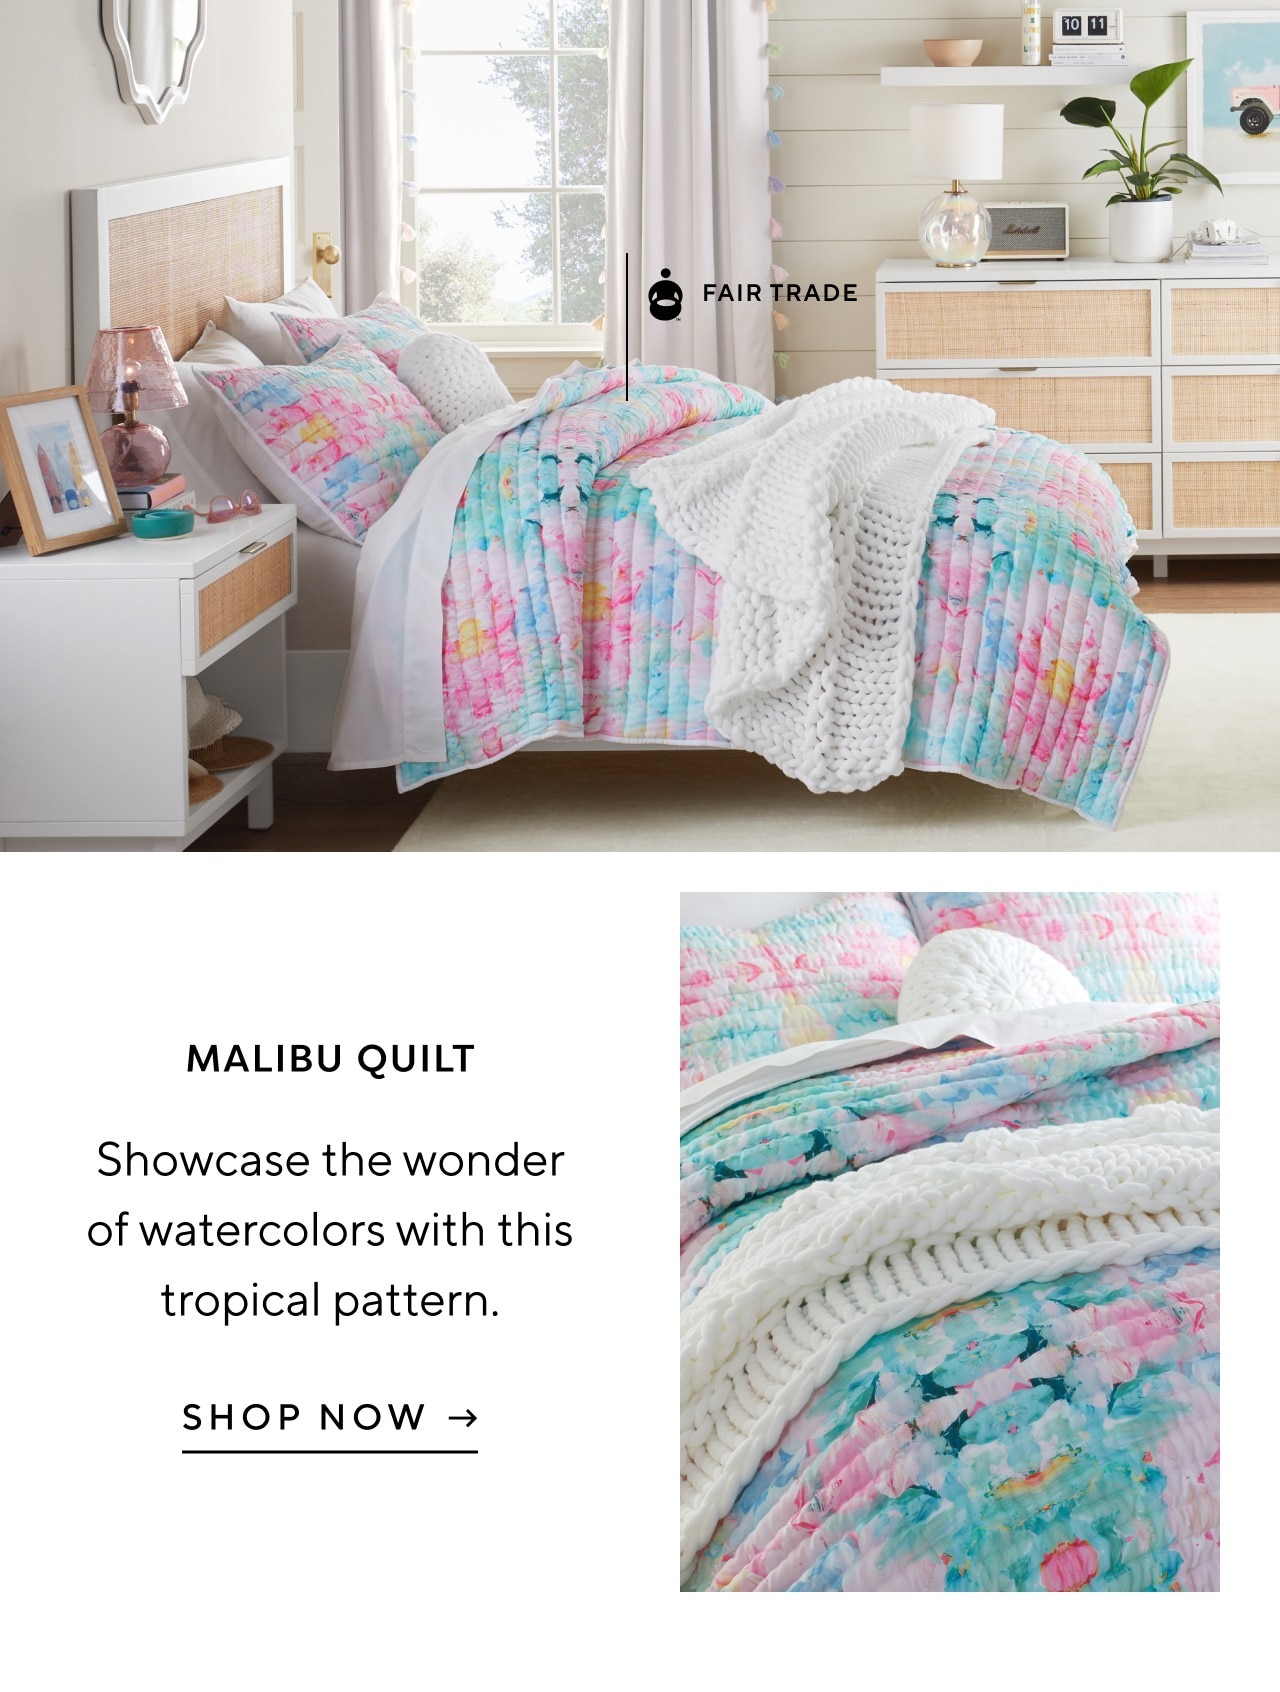 Malibu quilt